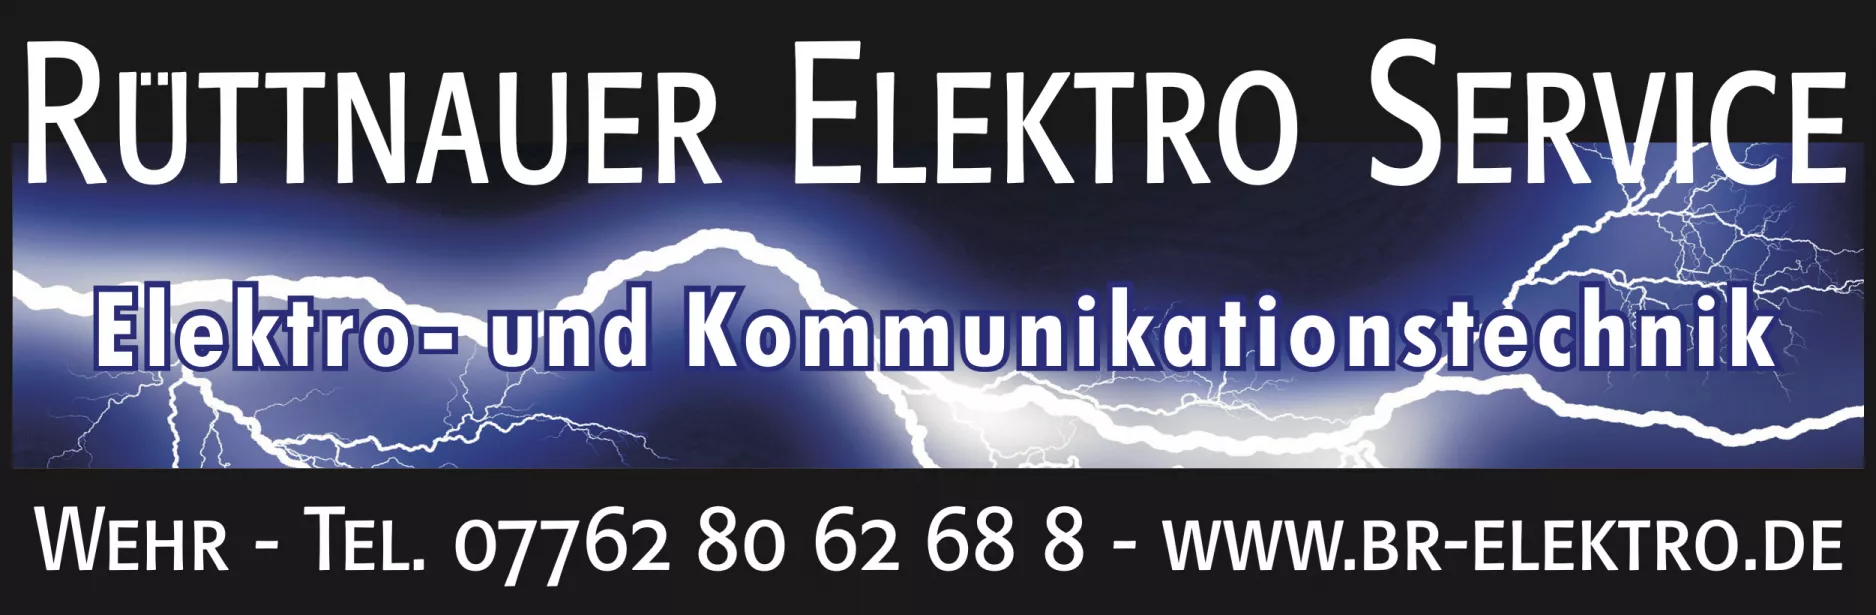 Rüttnauer Elektro Service